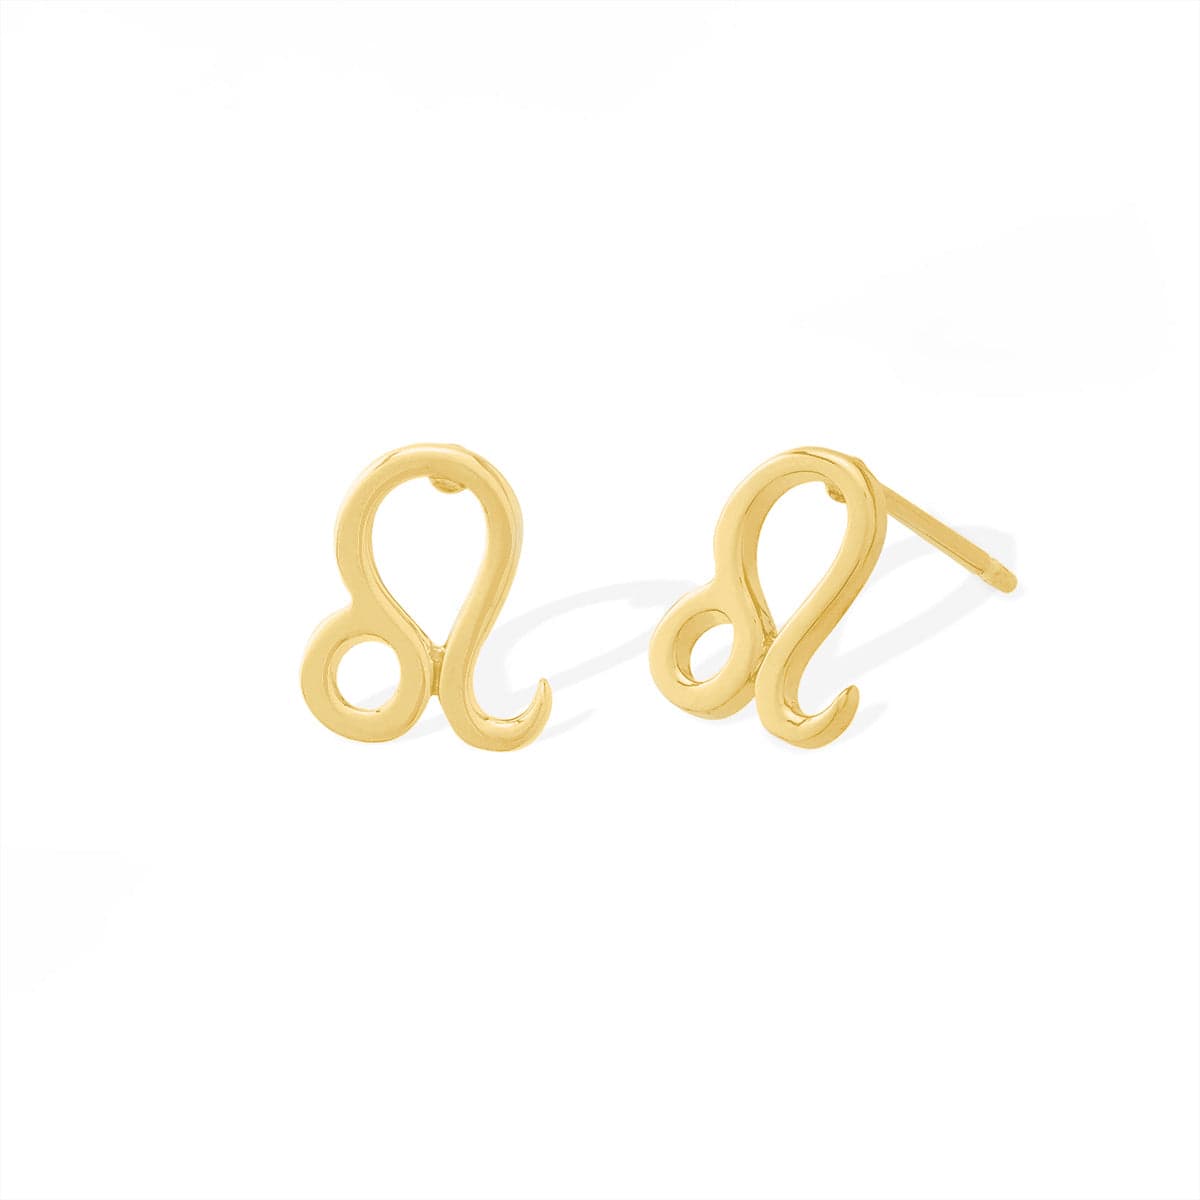 Boma Jewelry Earrings 14K Gold Plated / Leo Zodiac Studs